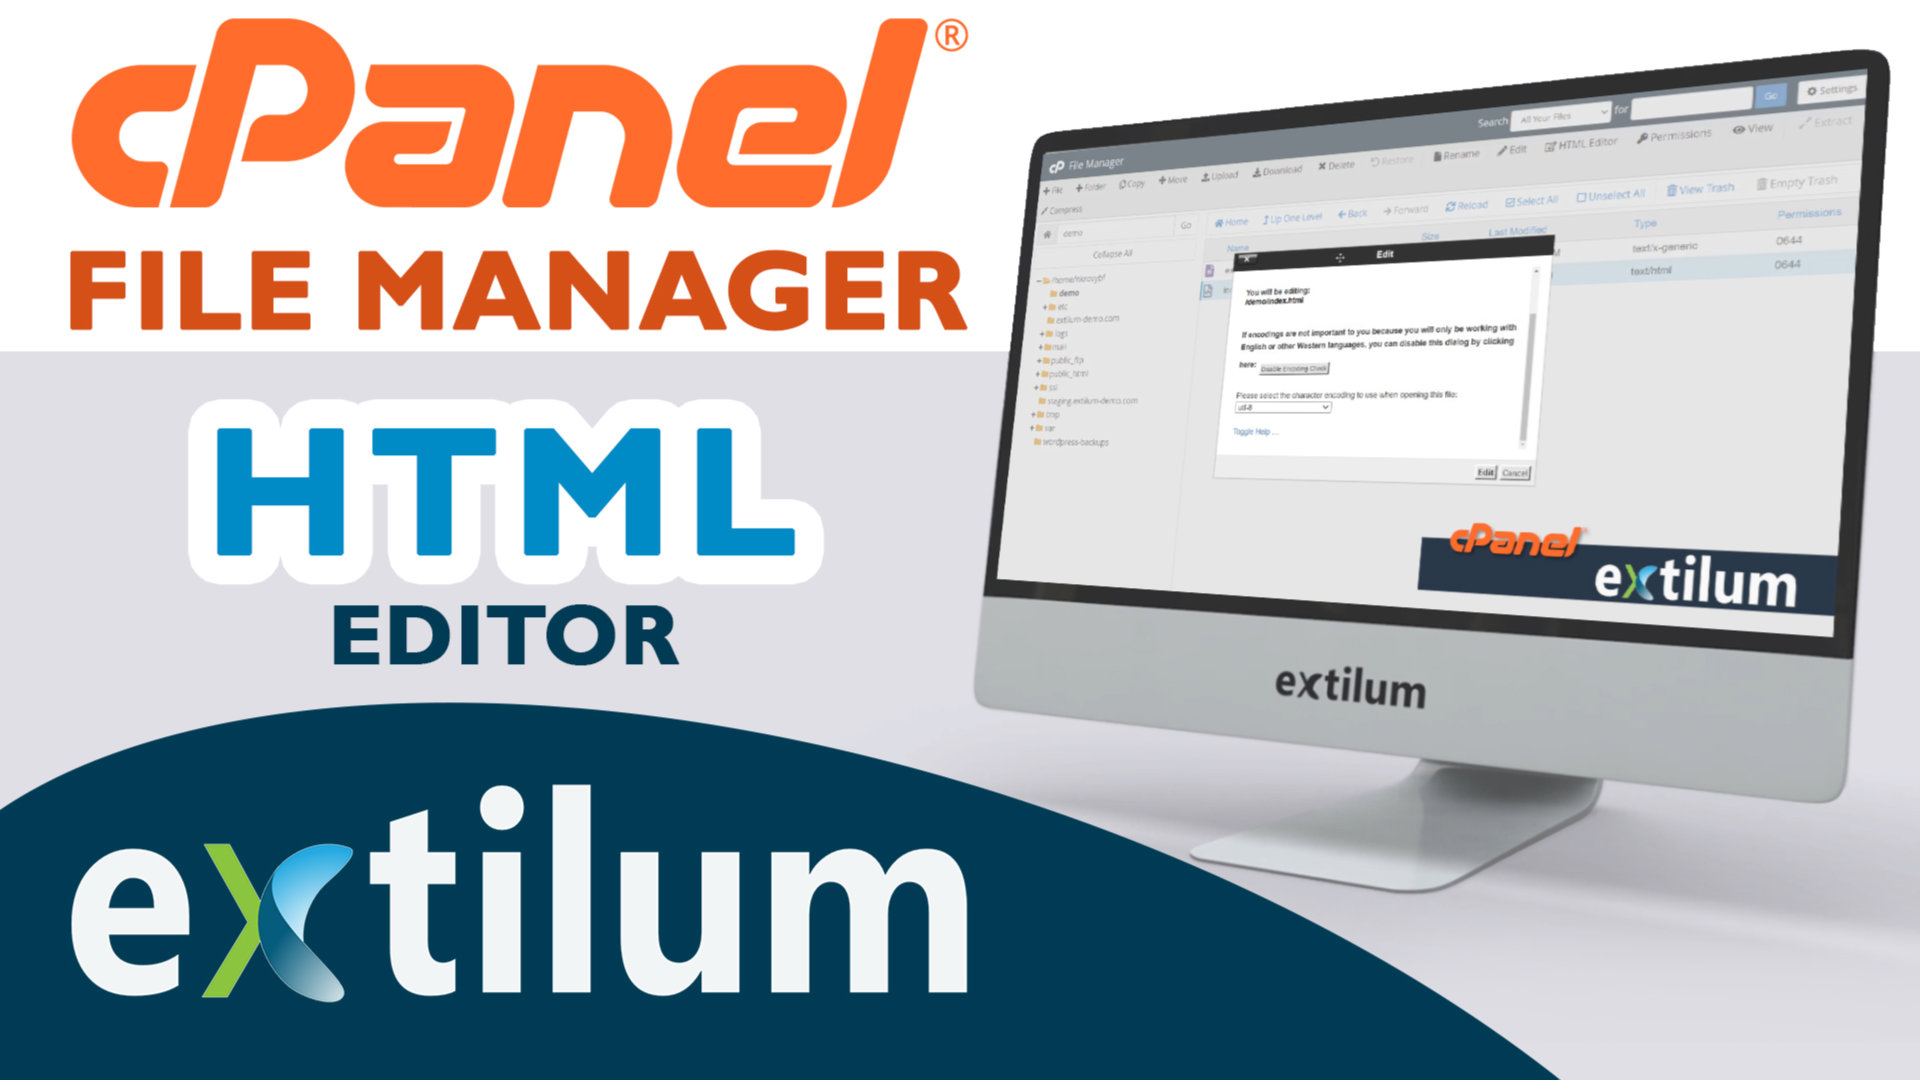 Extilum cpanel - file manager - html editor